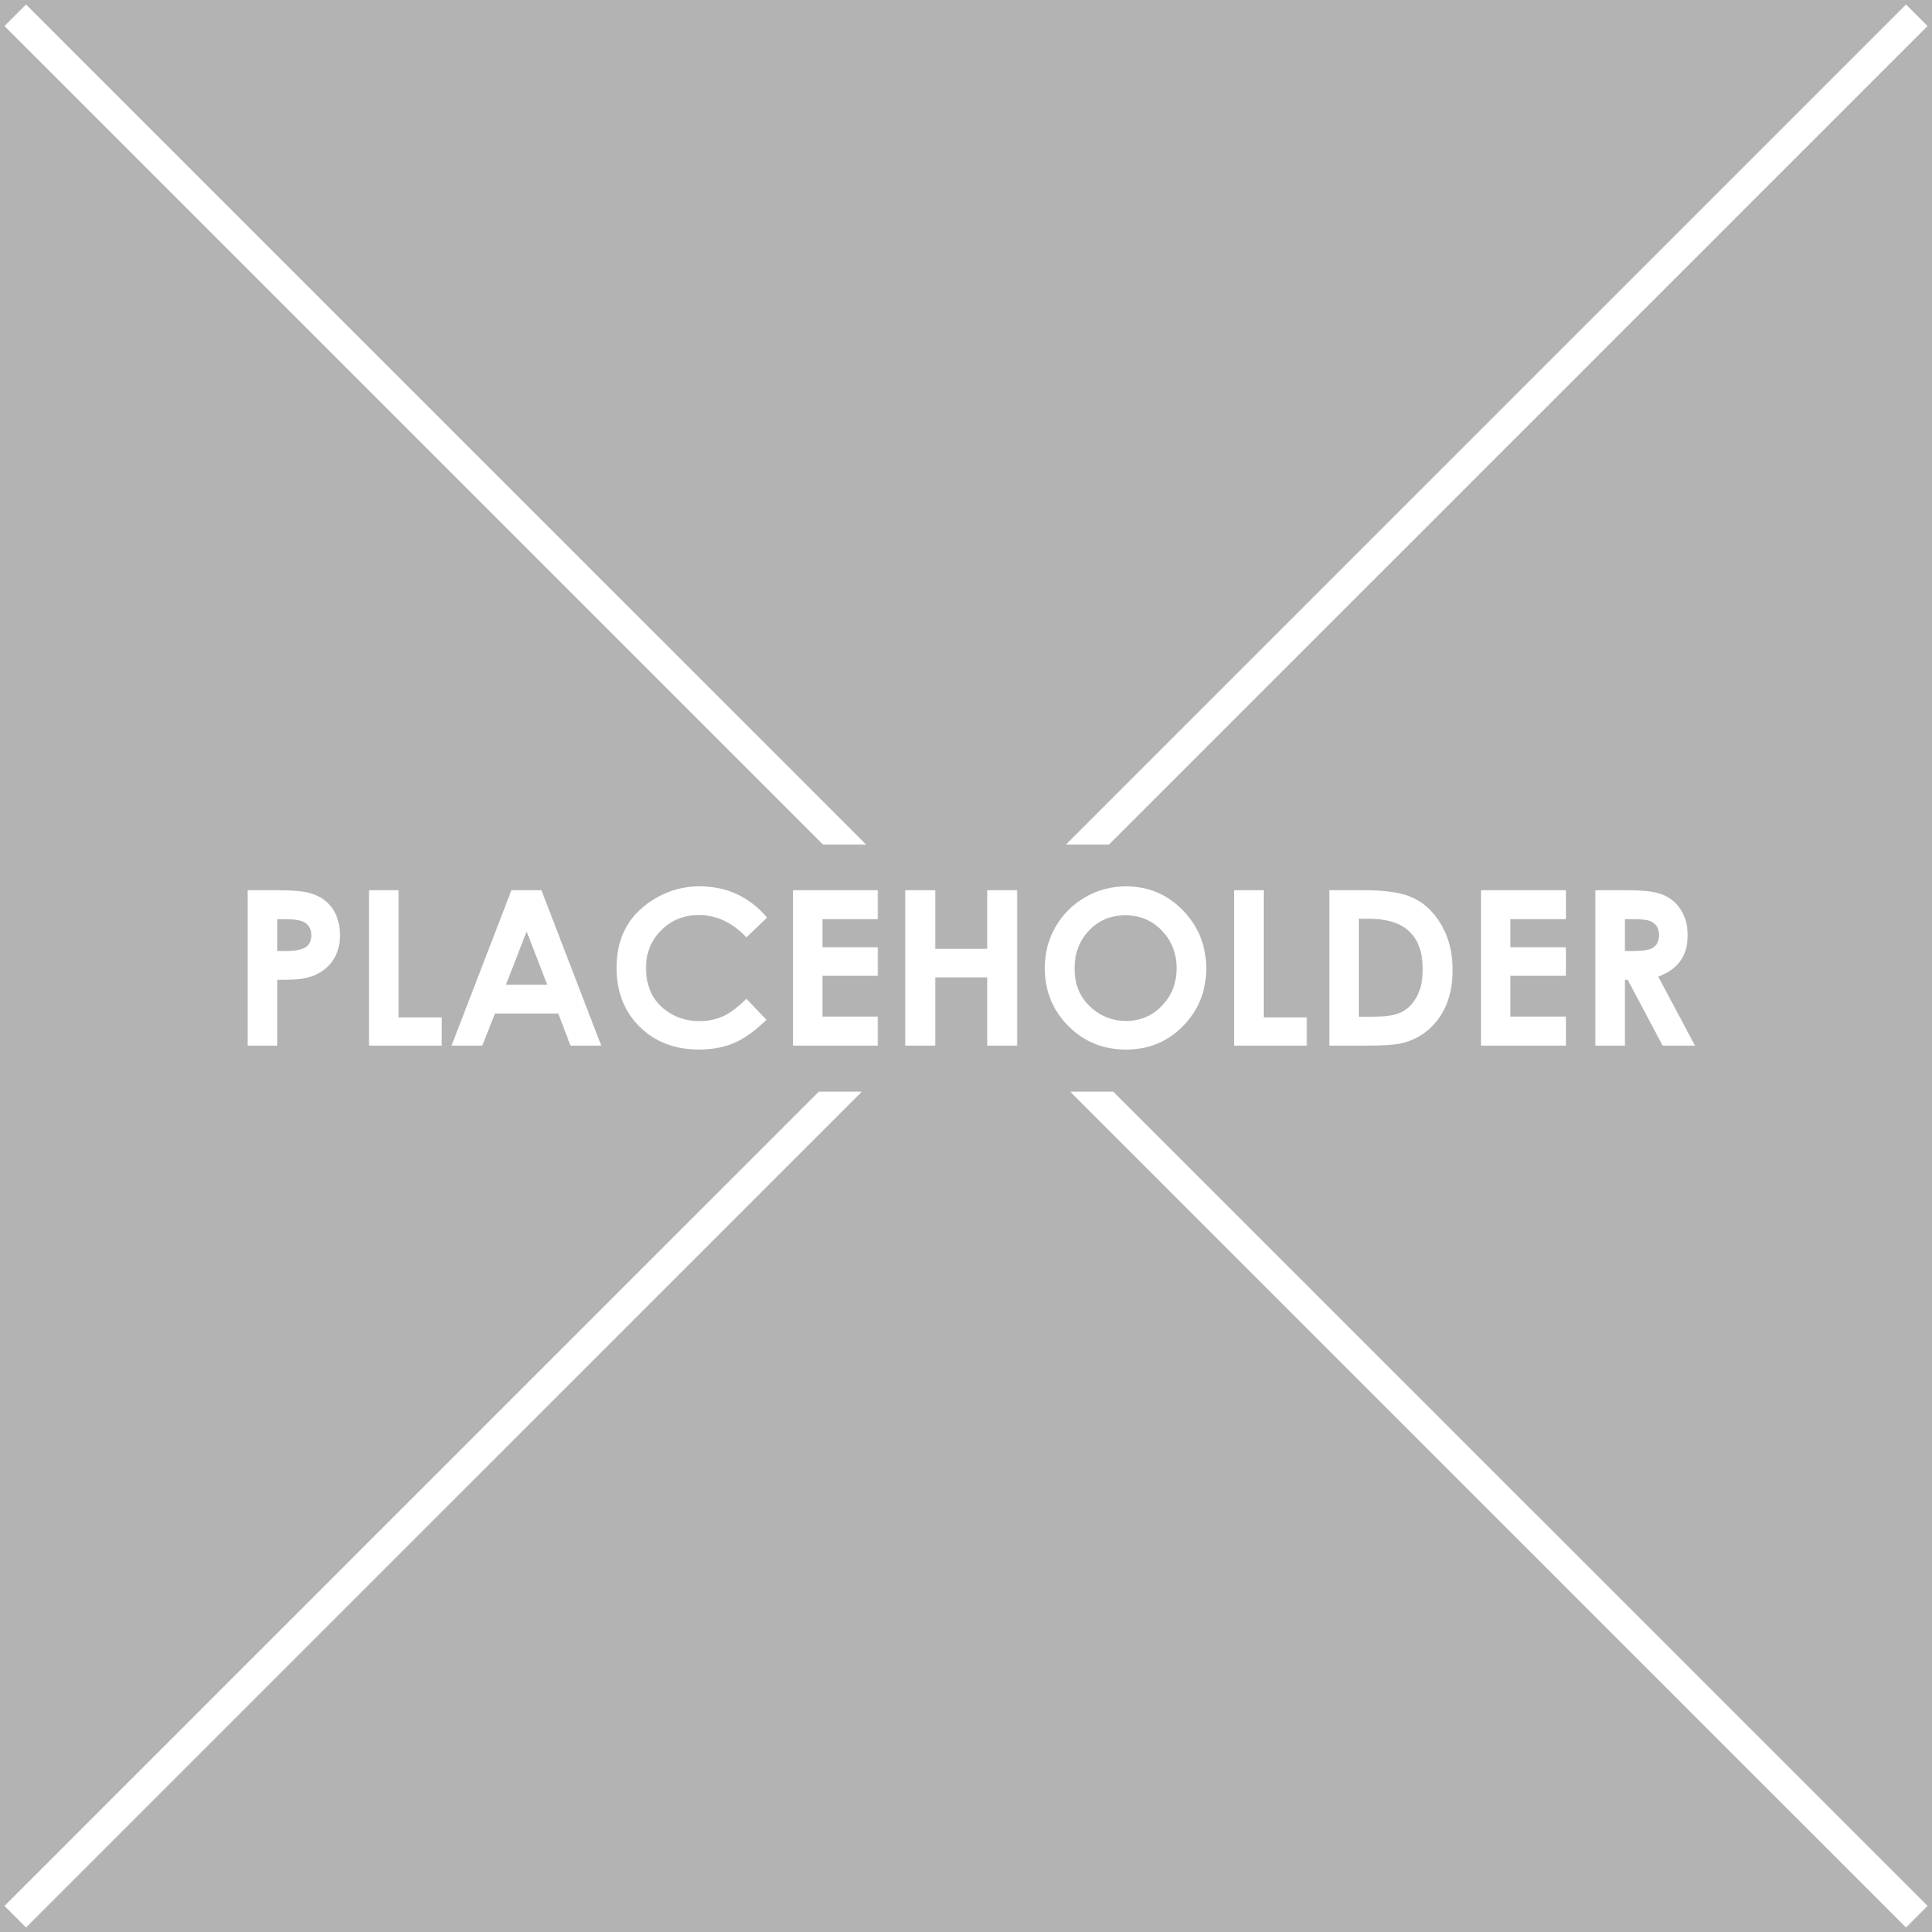 <placeholder>